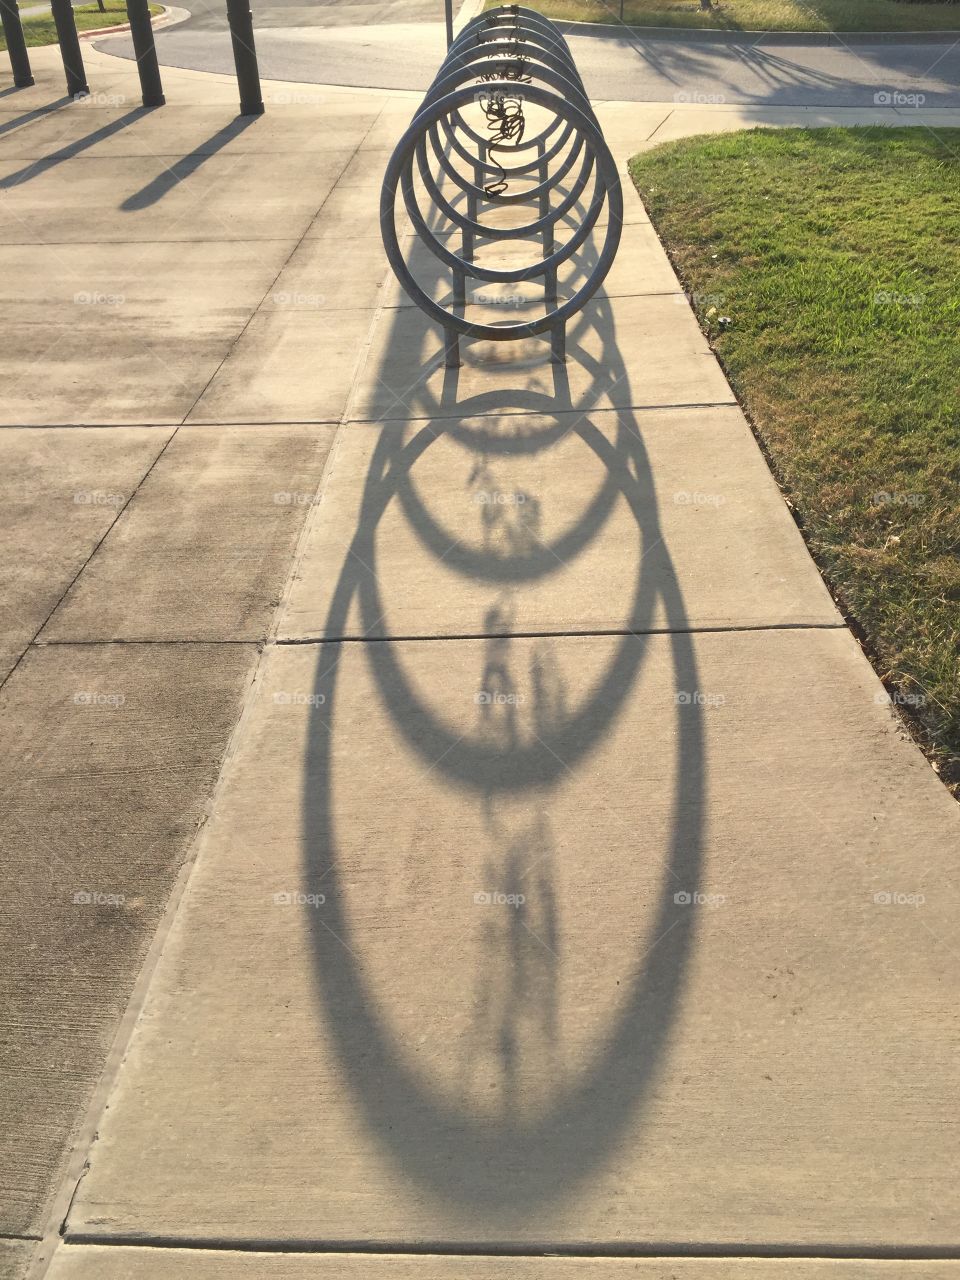 Bike rack in sunlight.